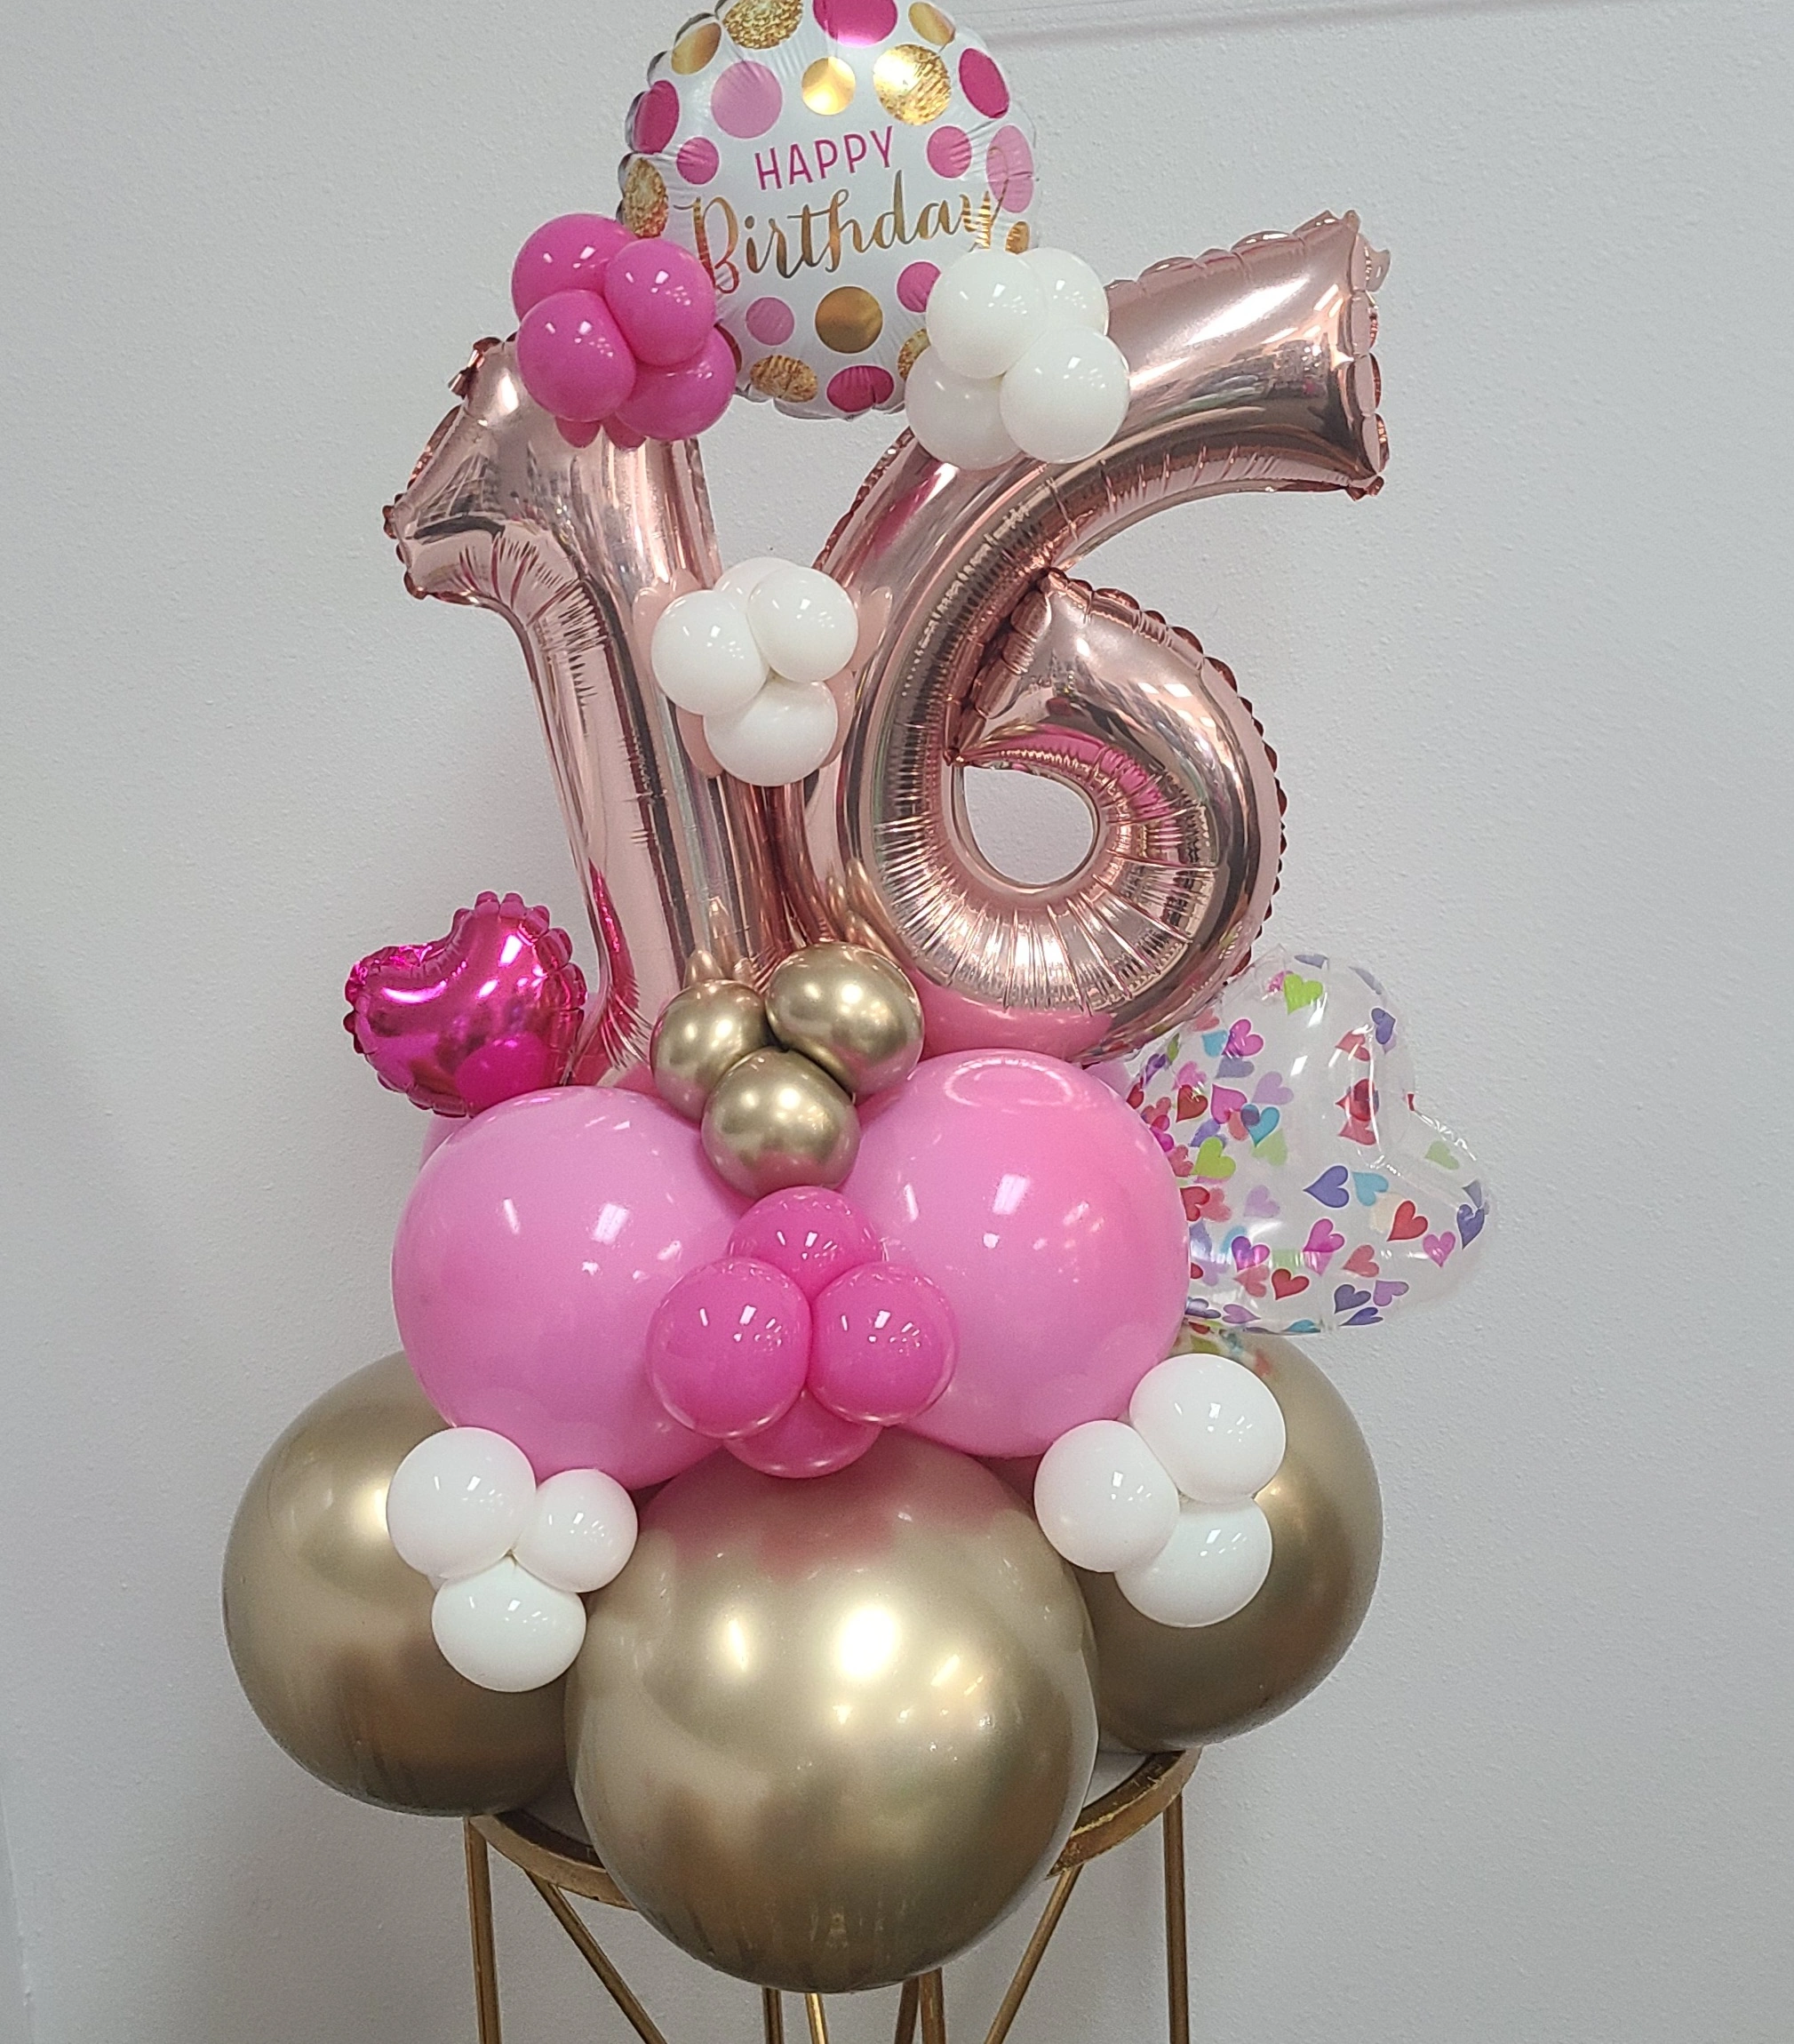 High-end Premium Balloon Decorations for Birthdays, Anniversaries